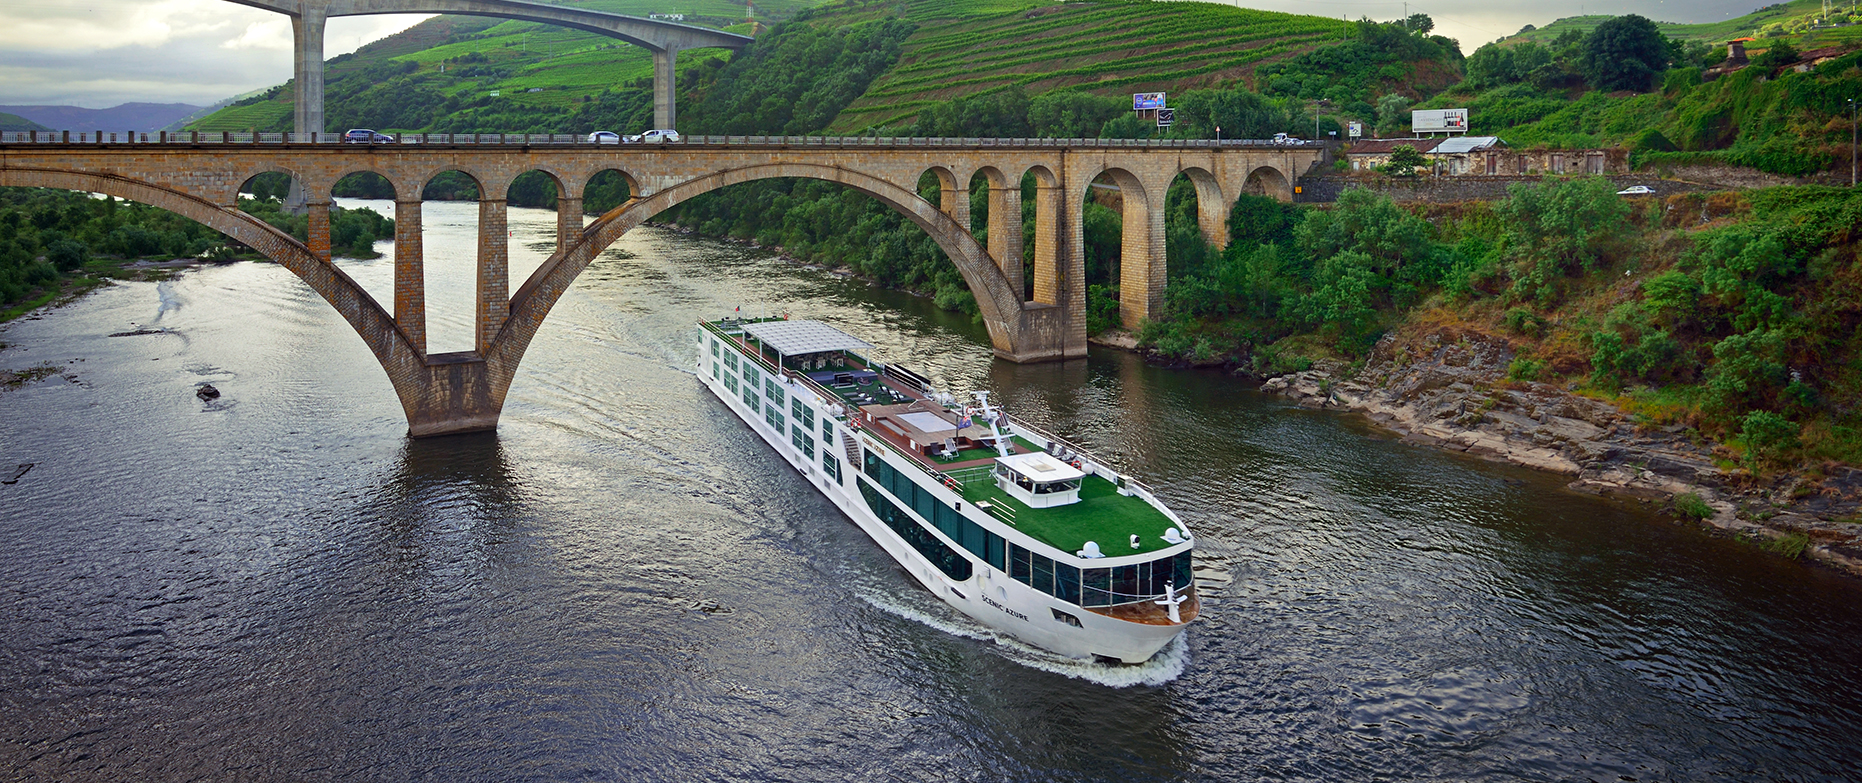 Scenic Azure – Douro River Cruise Review